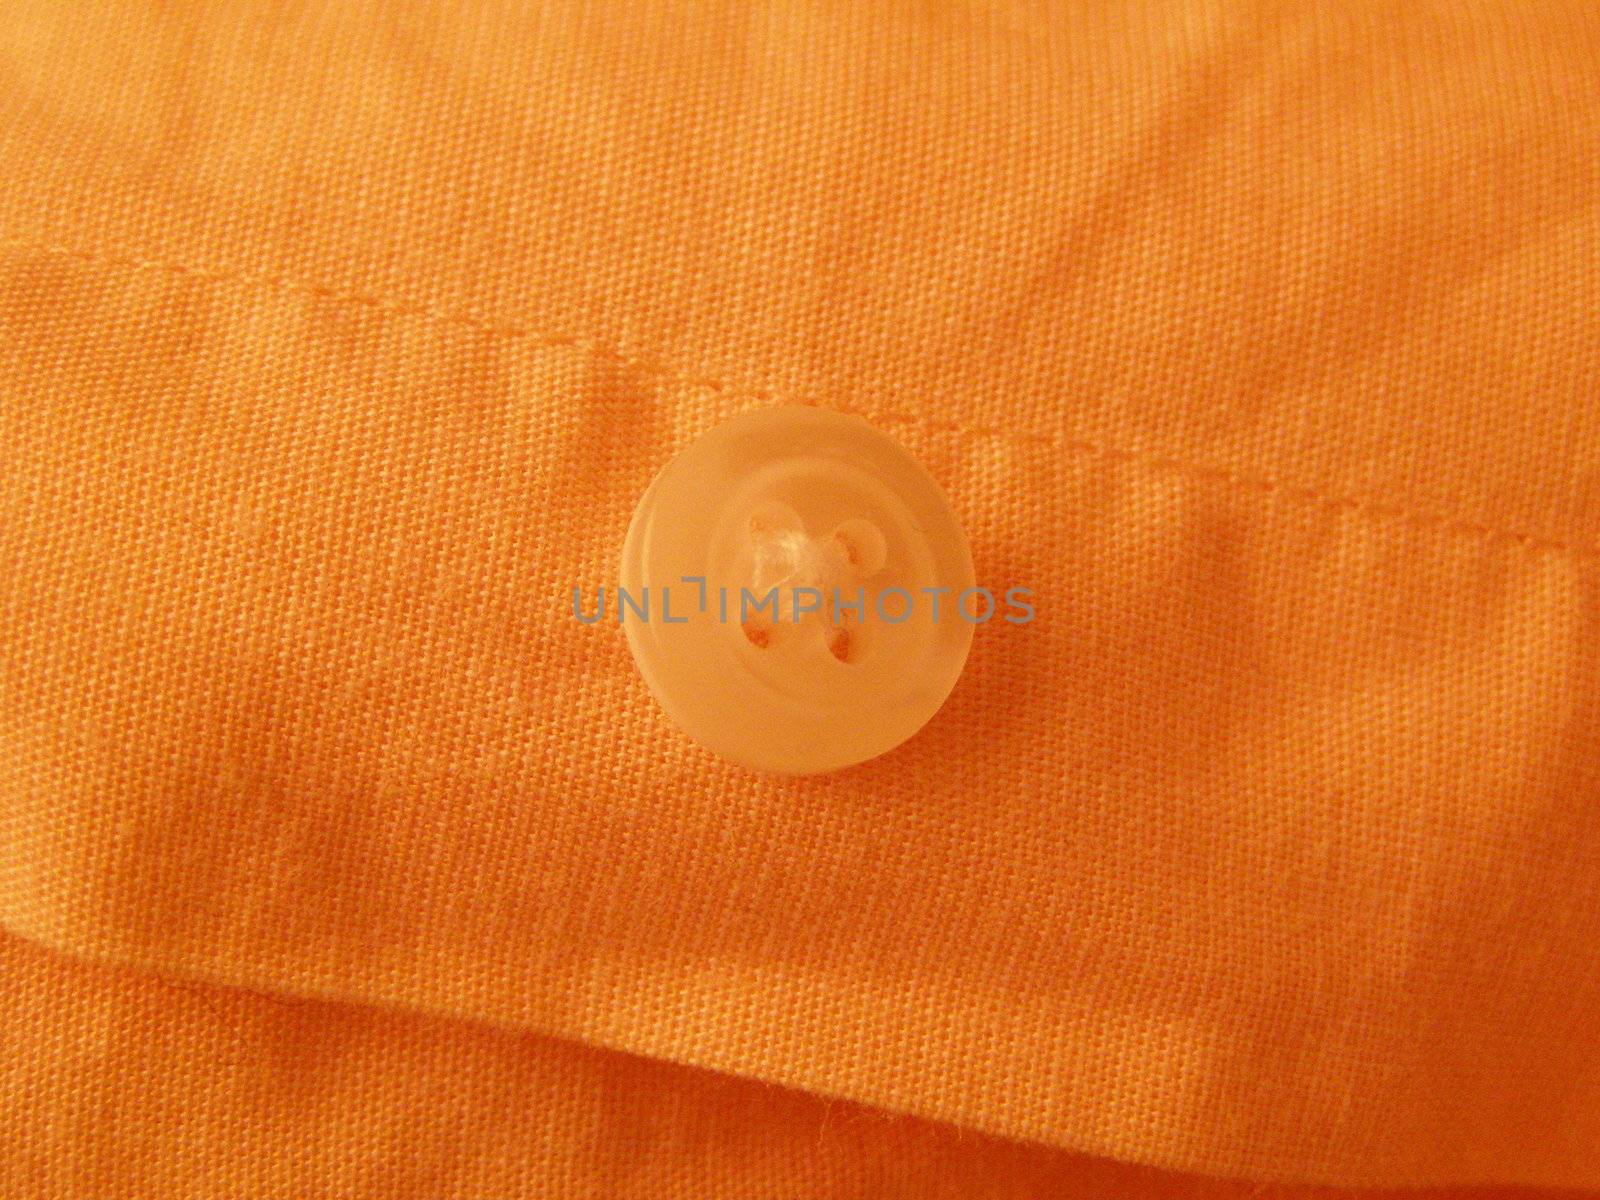 shirt button over orange shirt